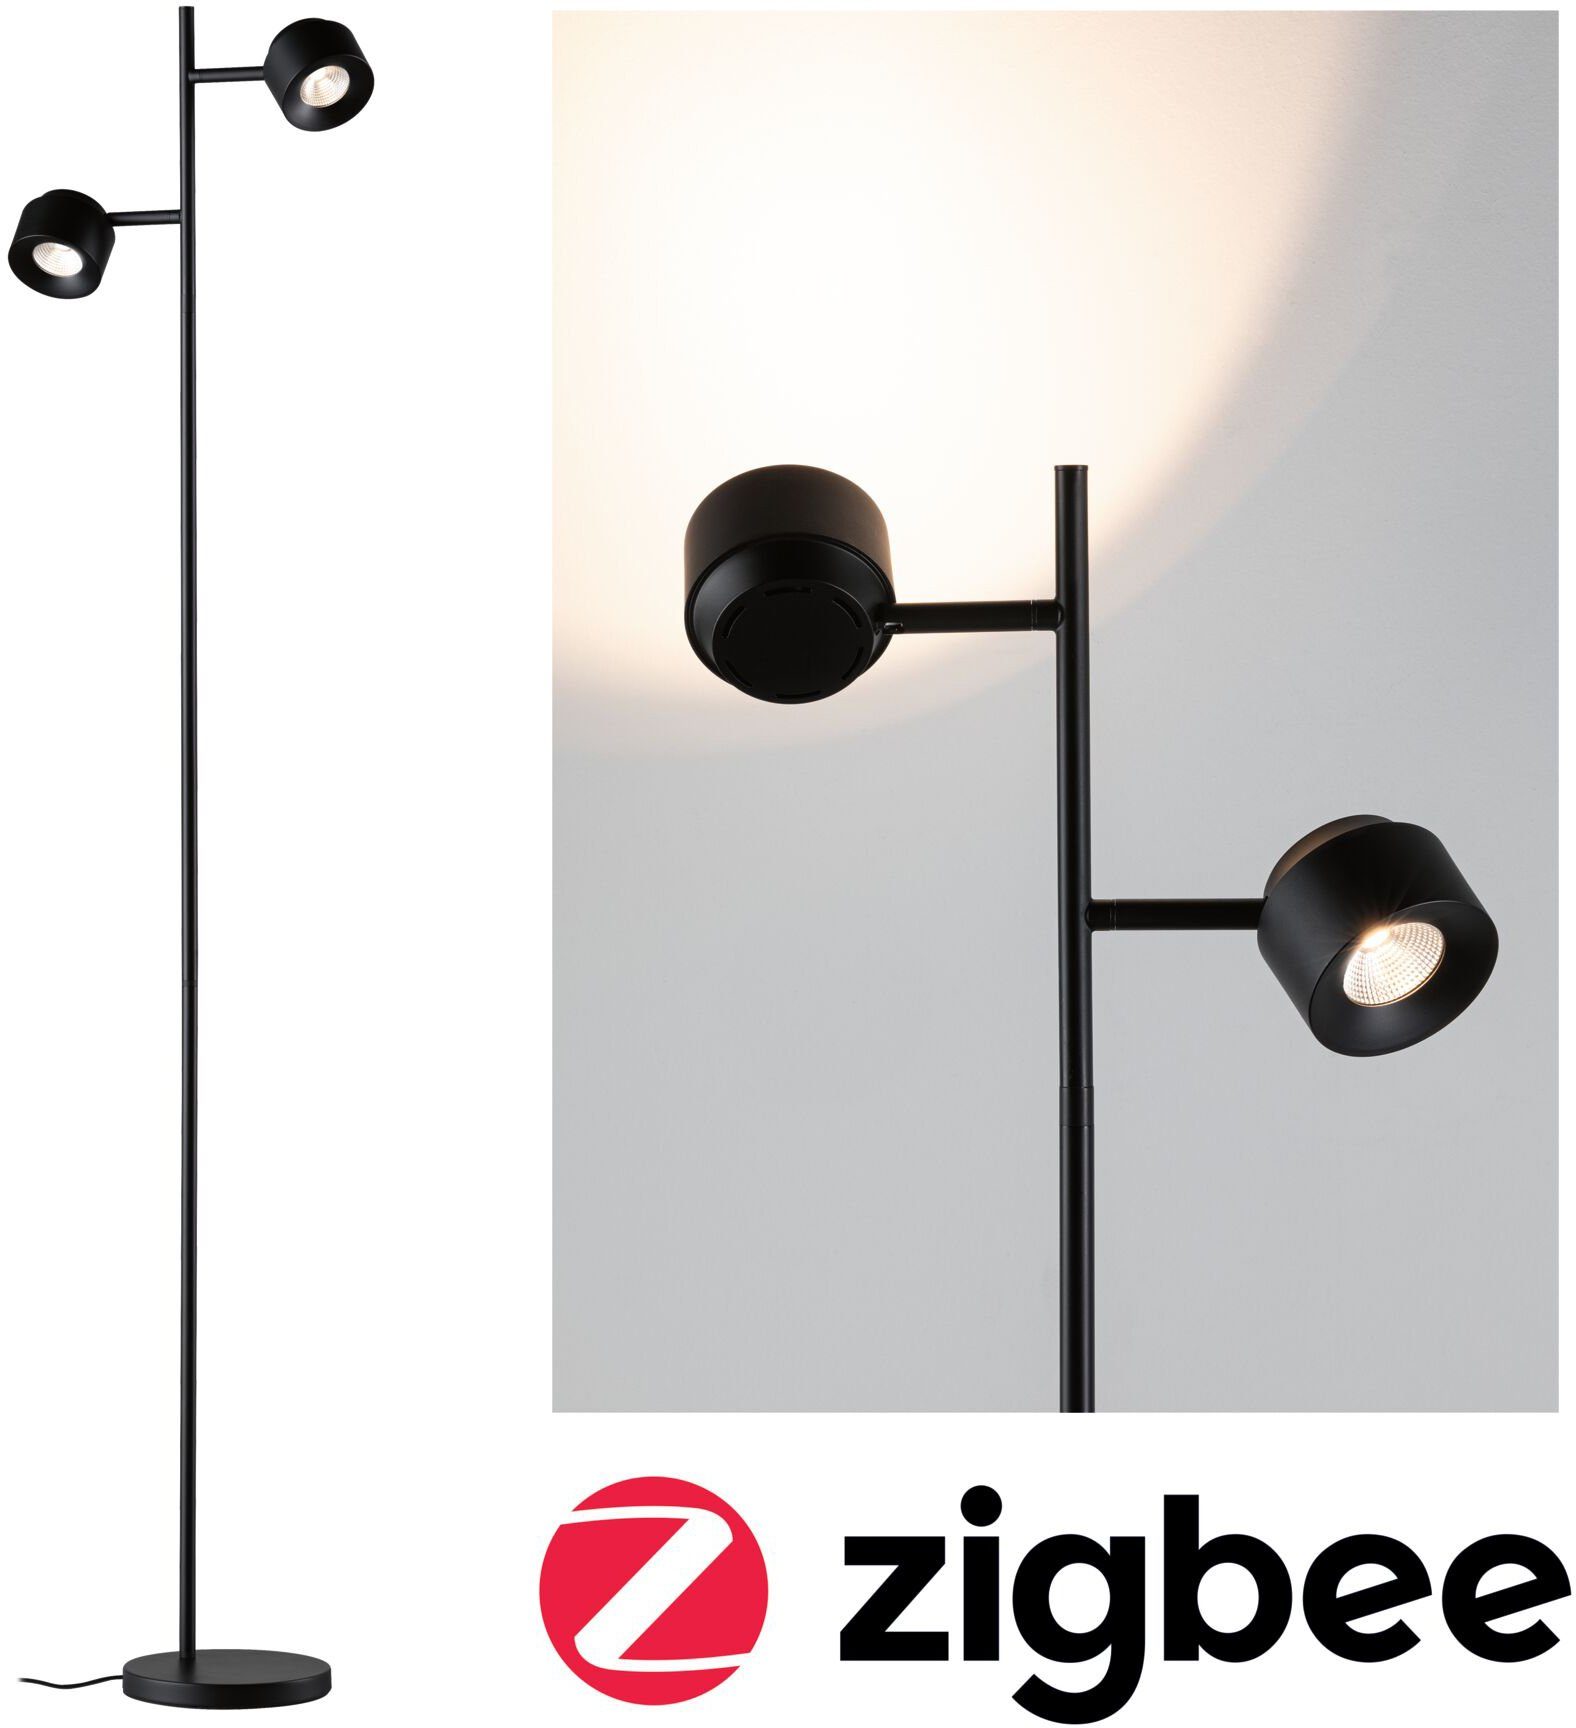 Zigbee via dimmbar, LED, Stehlampe fest Home: LED Smartes steuerbar Schwarz/Grau, Smart Paulmann Deckenlicht Metall, Warmweiß, integriert, Puric Pane,